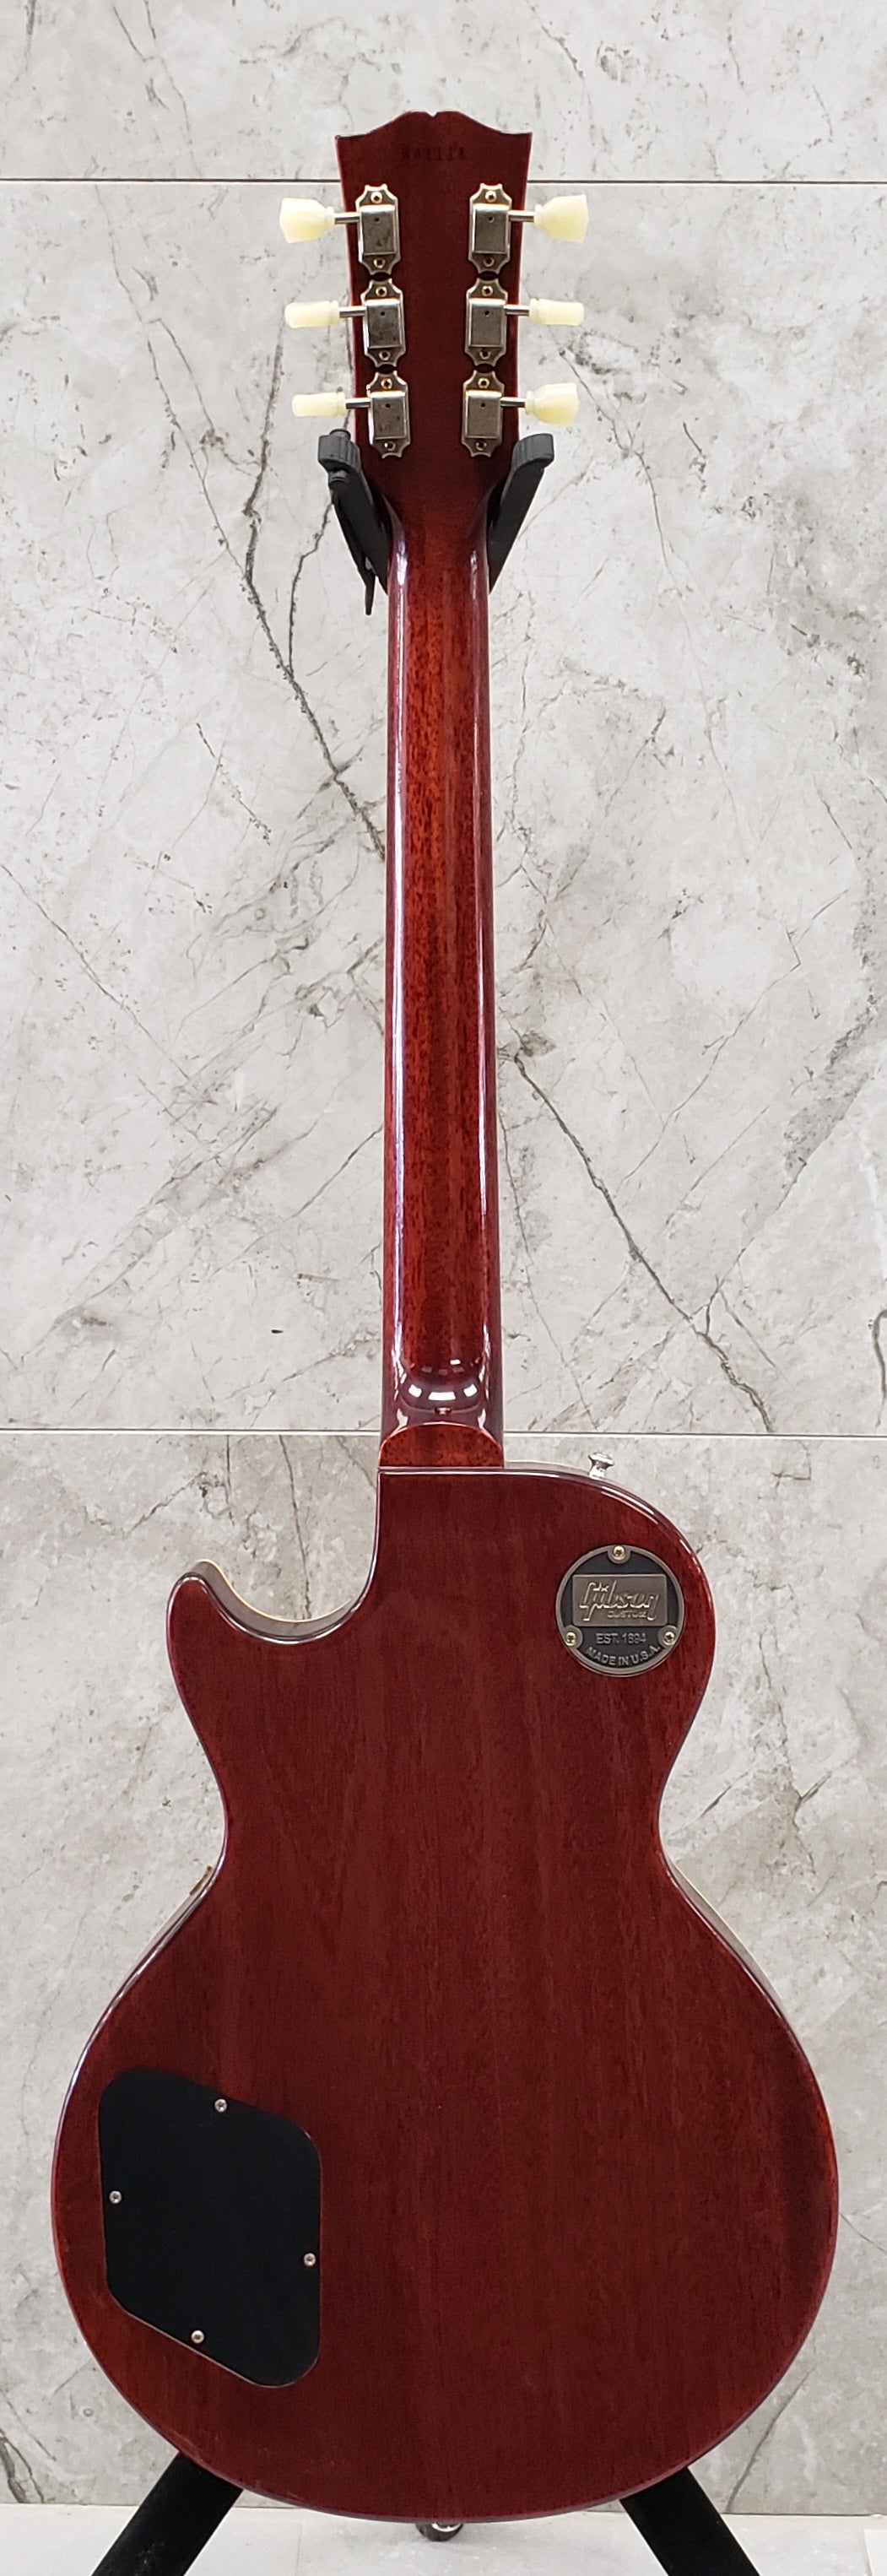 Gibson Custm Shop 1958 Les Paul Standard Reissue VOS Iced Tea Burst LPR58VOITNH SERIAL NUMBER 801118 - 8.6 LBS